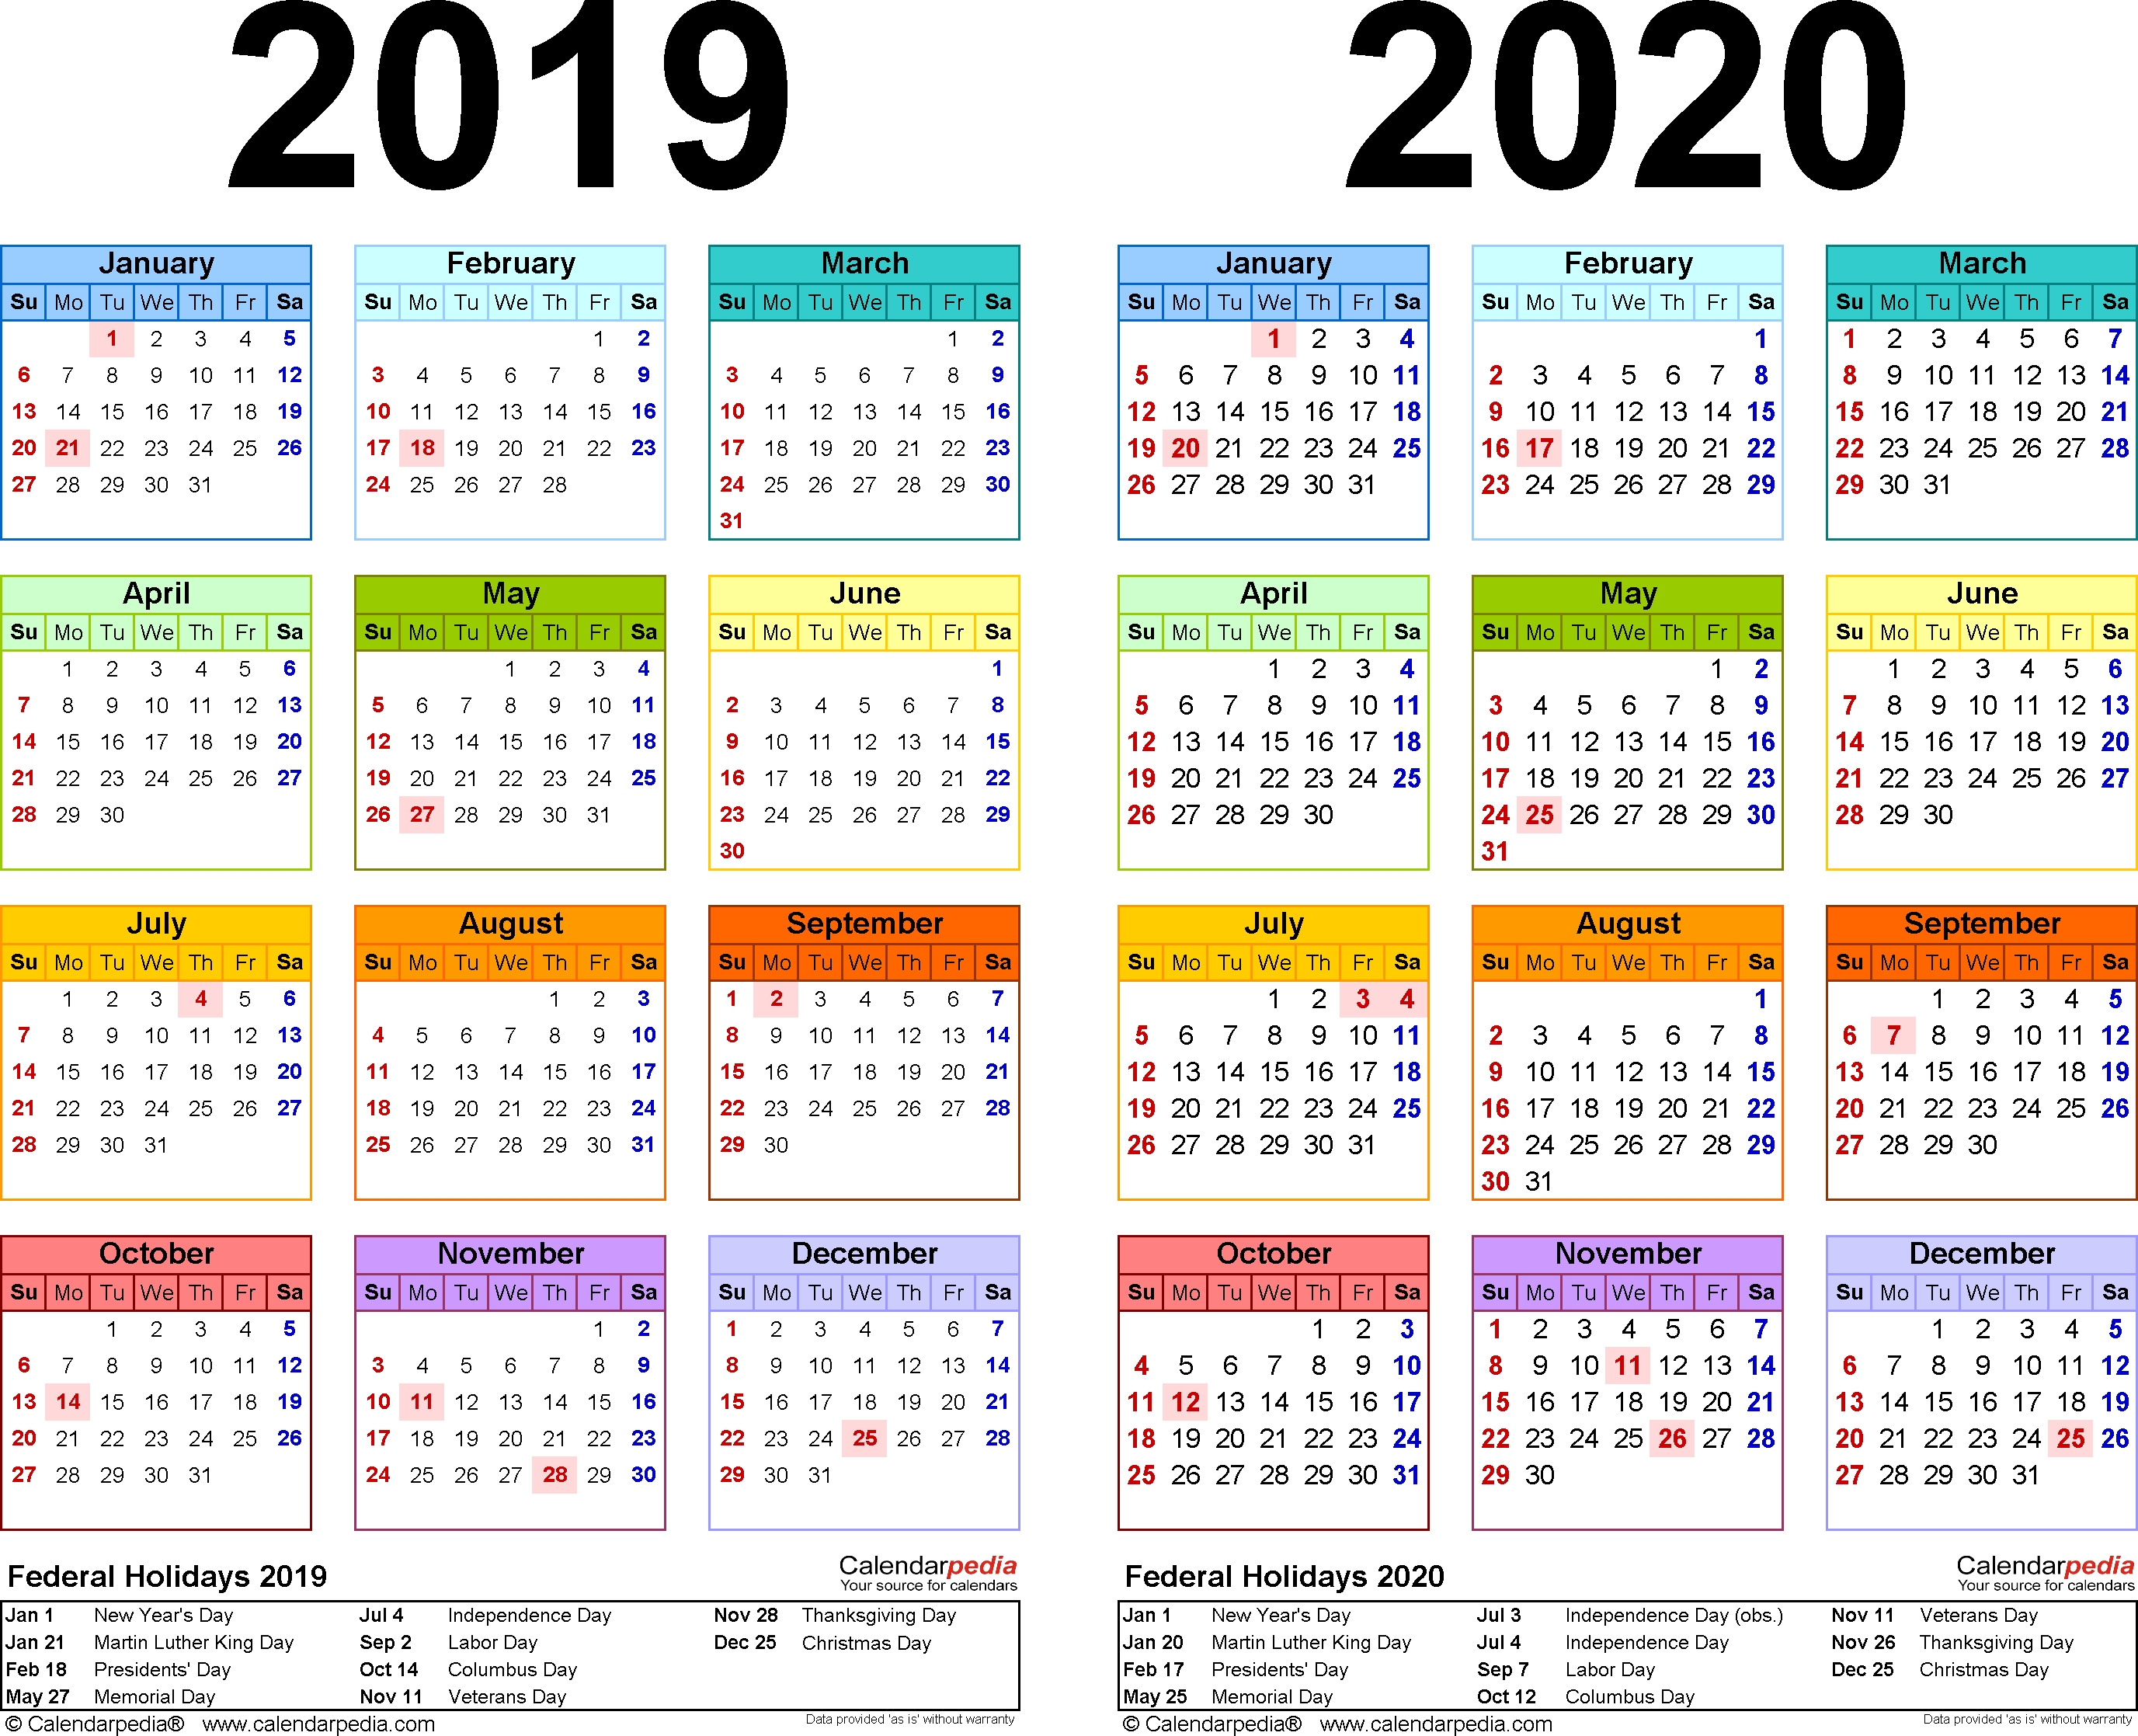 2019-2020 Calendar - Free Printable Two-Year Excel Calendars inside 2019 And 2020 Google Calendars